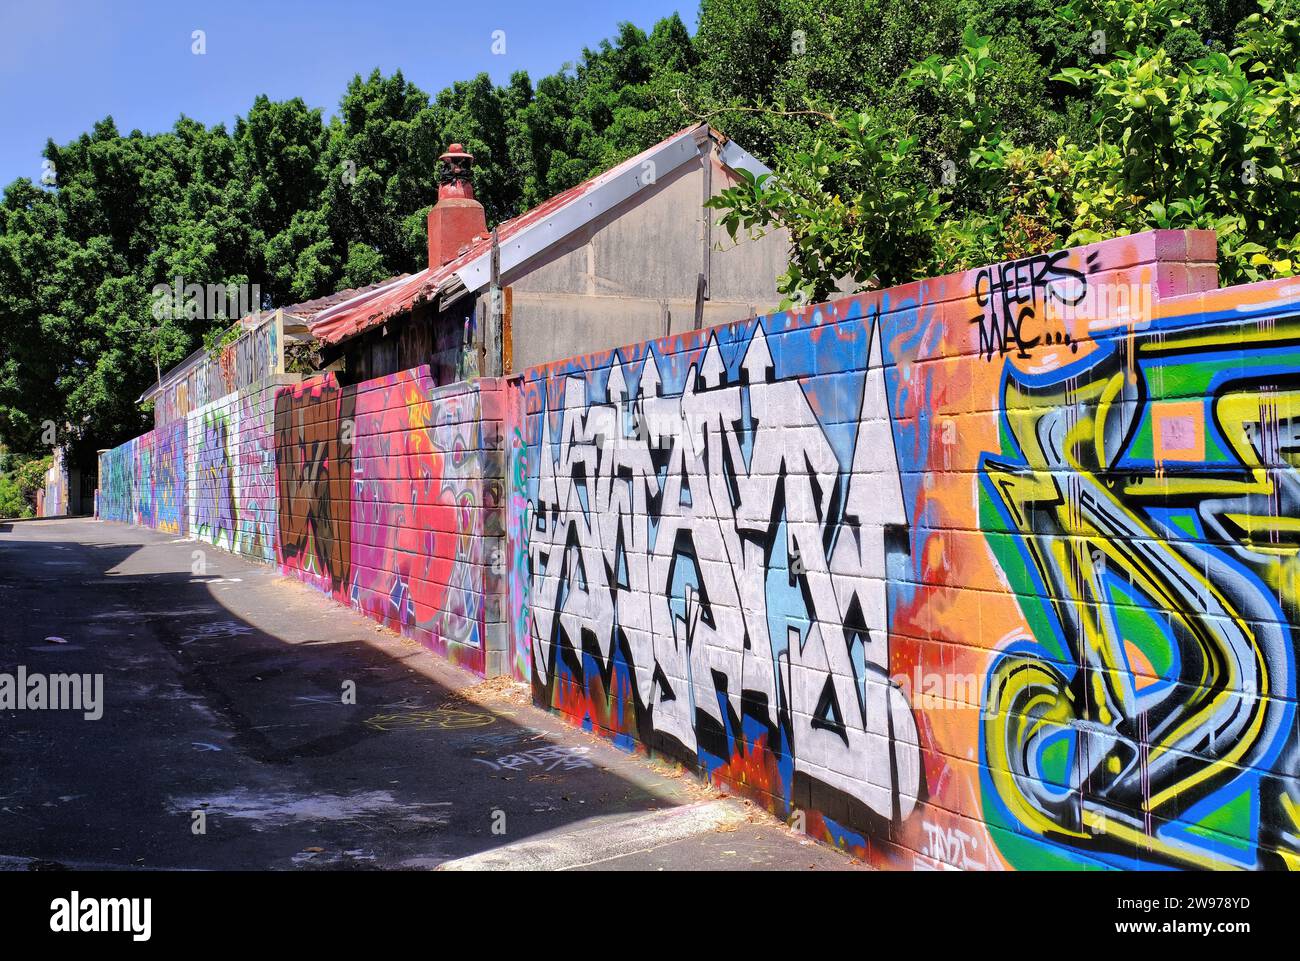 Perth: Street art along Mereny Lane, Highgate, Perth, Western Australia Stock Photo